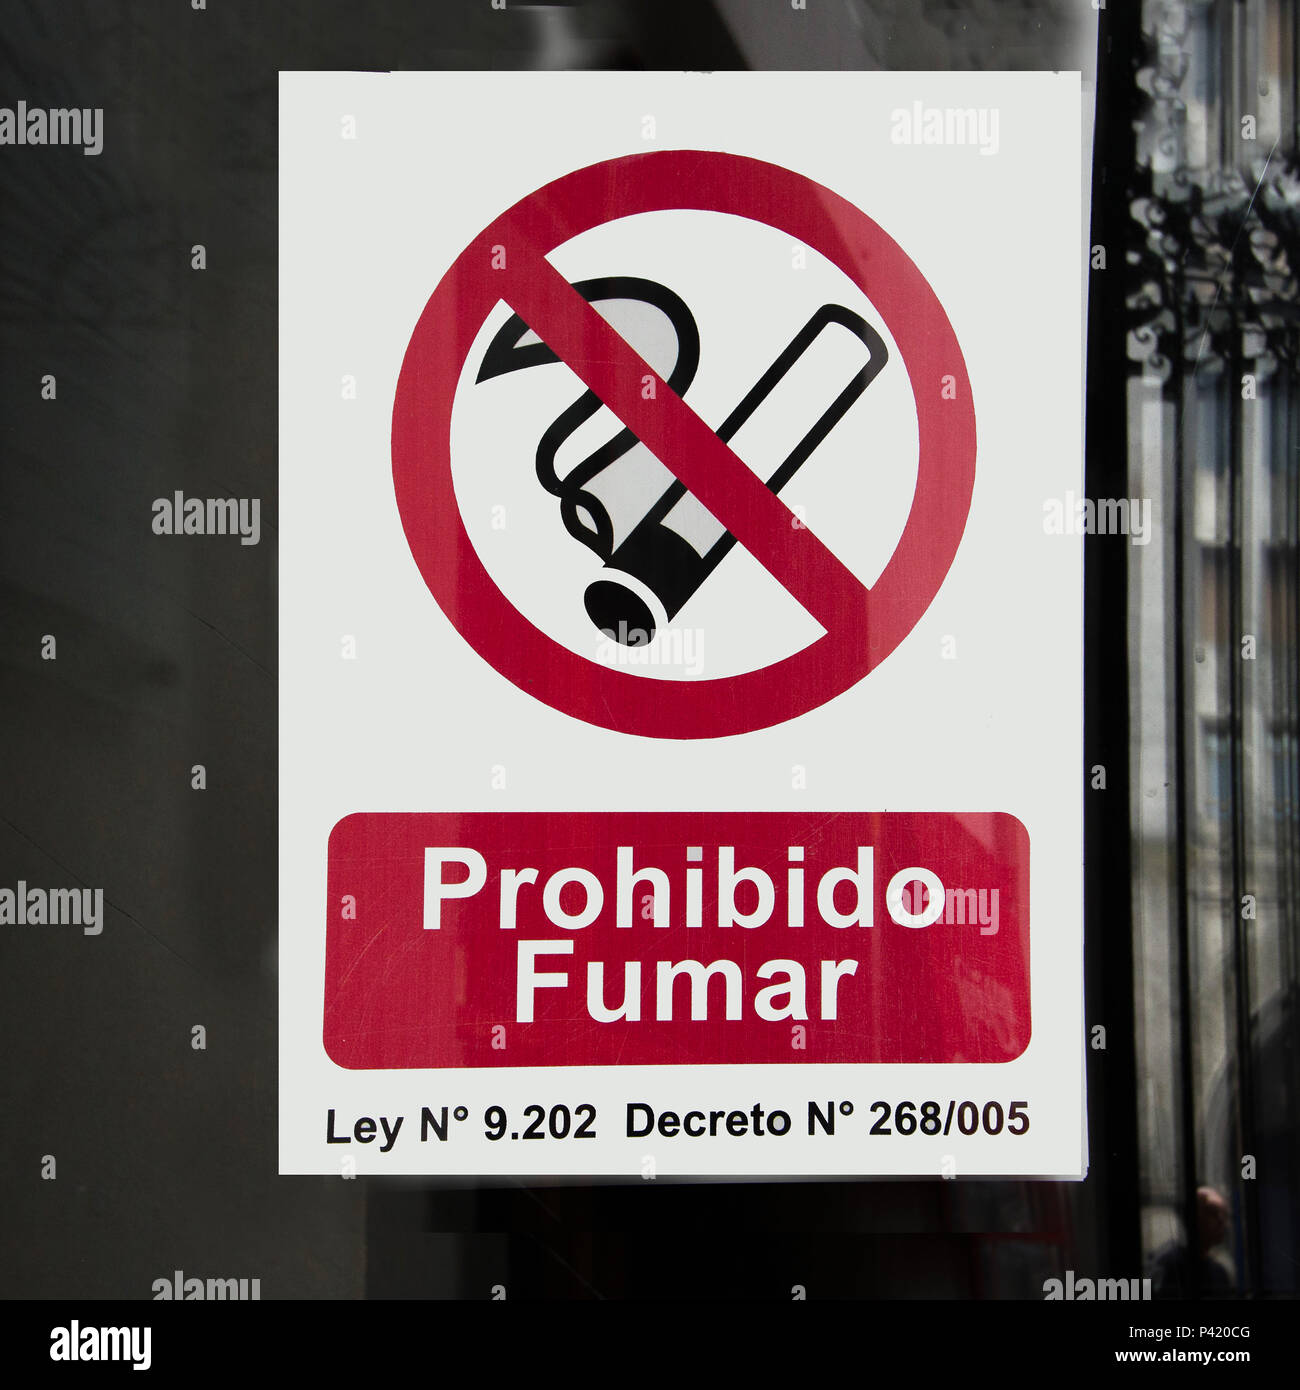 Montevidéu - Uruguai Prohibido Fumar Placa de Proibido Fumar Placa de Proibido Fumar em espanhol Montevidéu Uruguai América do Sul Stock Photo